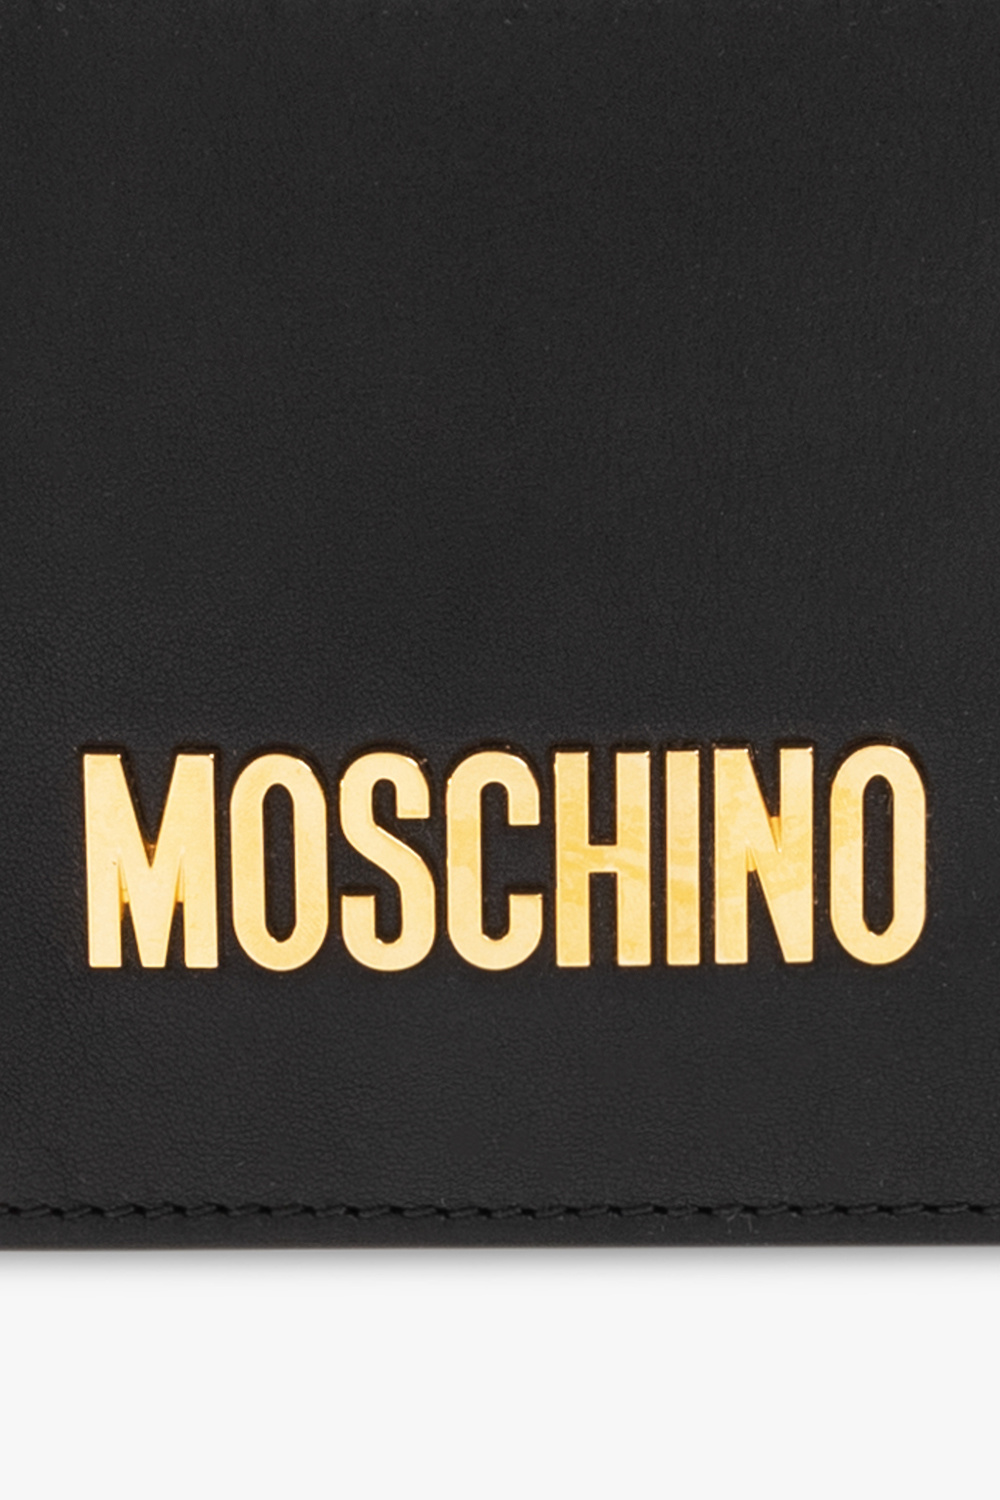 Moschino Enter the universe